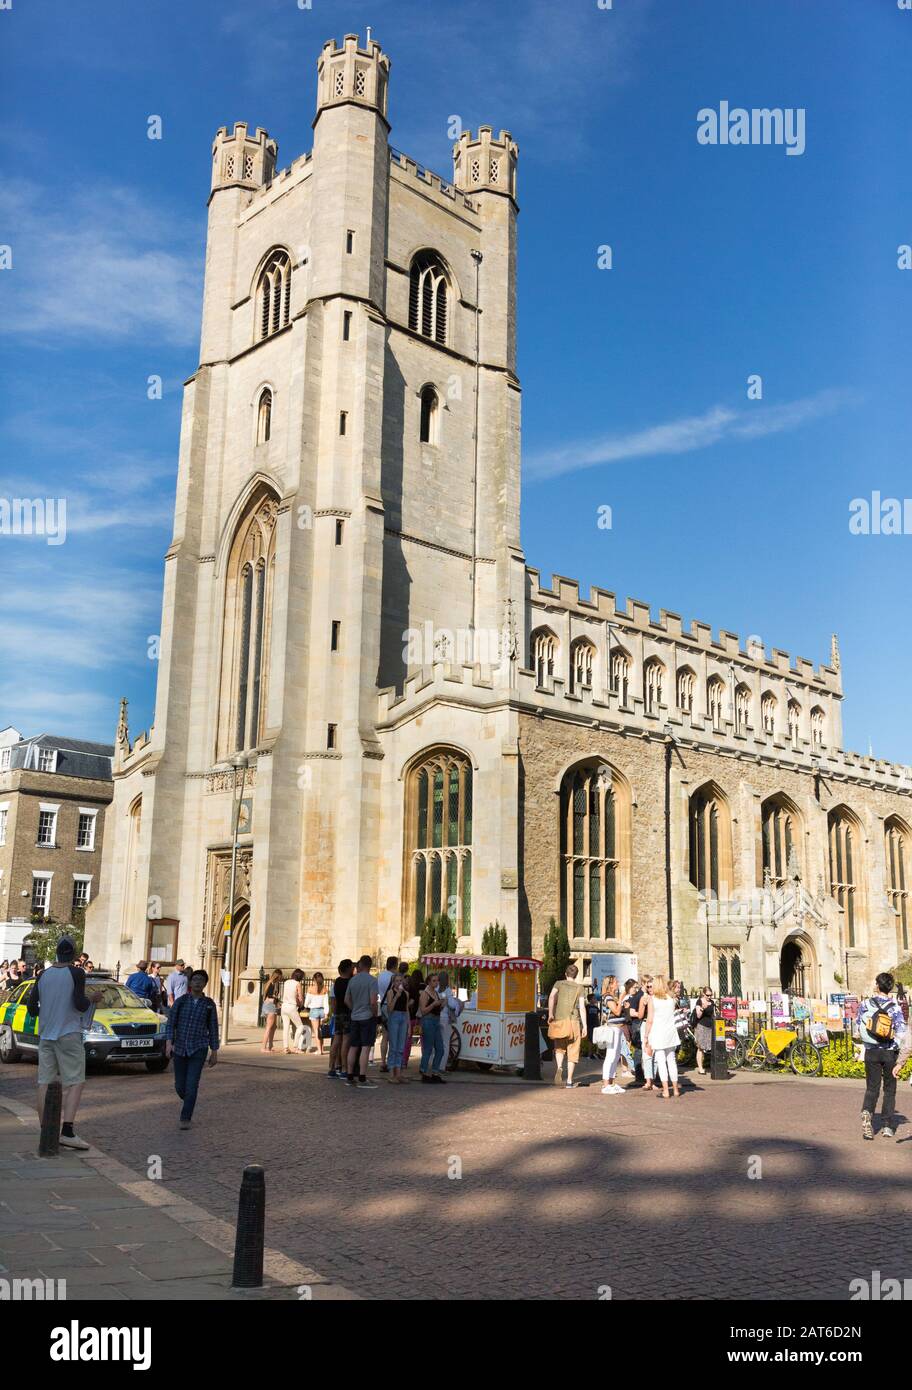 Great St Mary's Church in Cambridge, United Kingdom Stock Photo